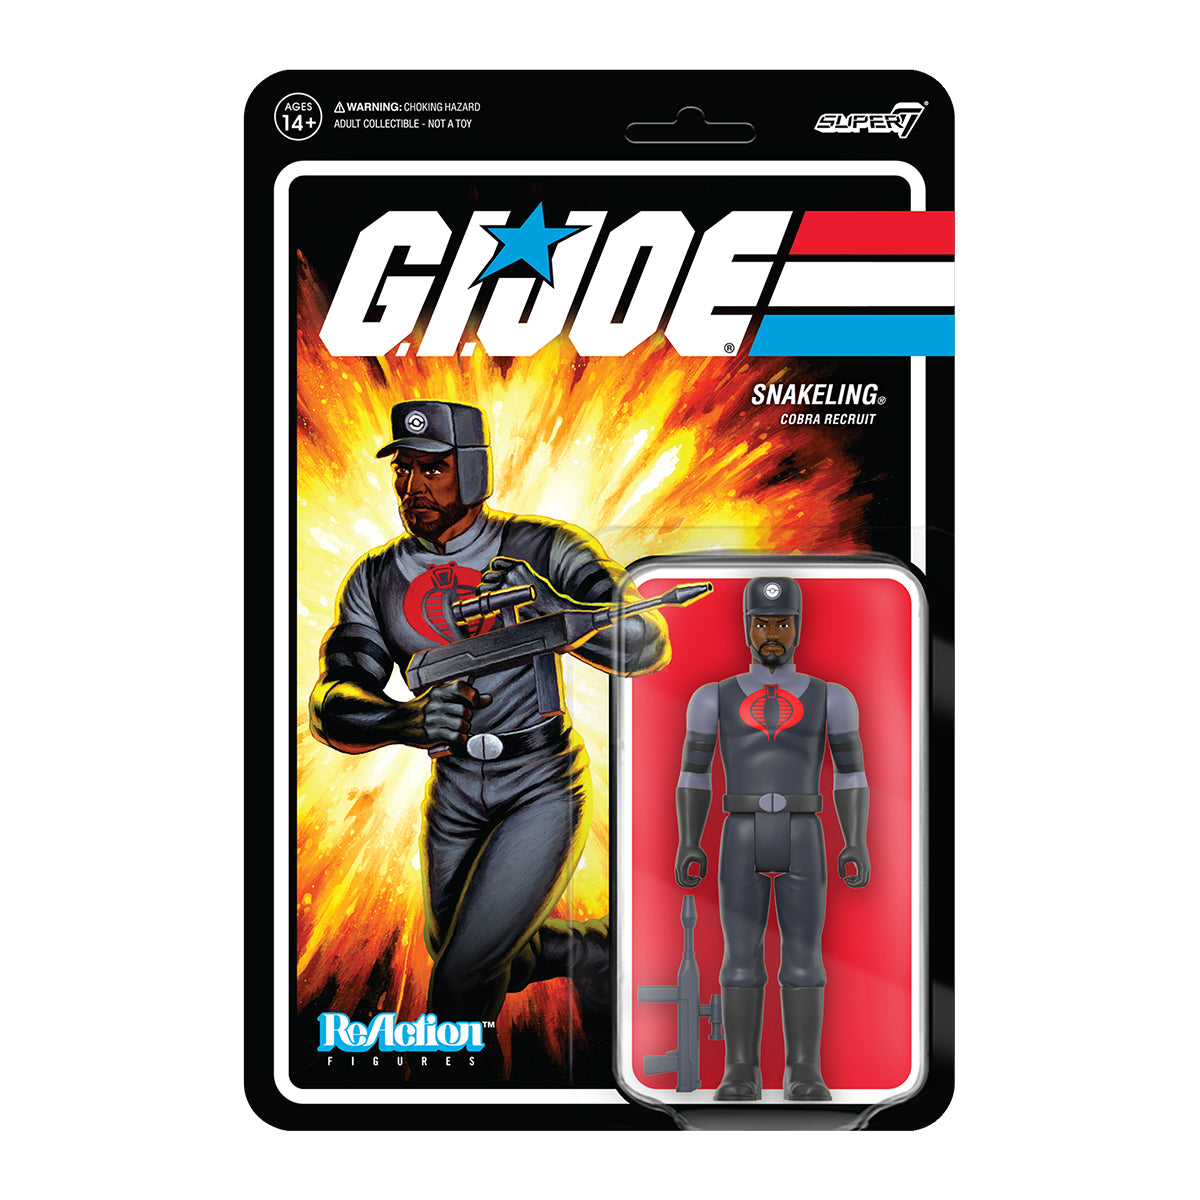 G.I. Joe ReAction Figures Wave 3 - Cobra Snakeling Factory Worker Beard (Brown)